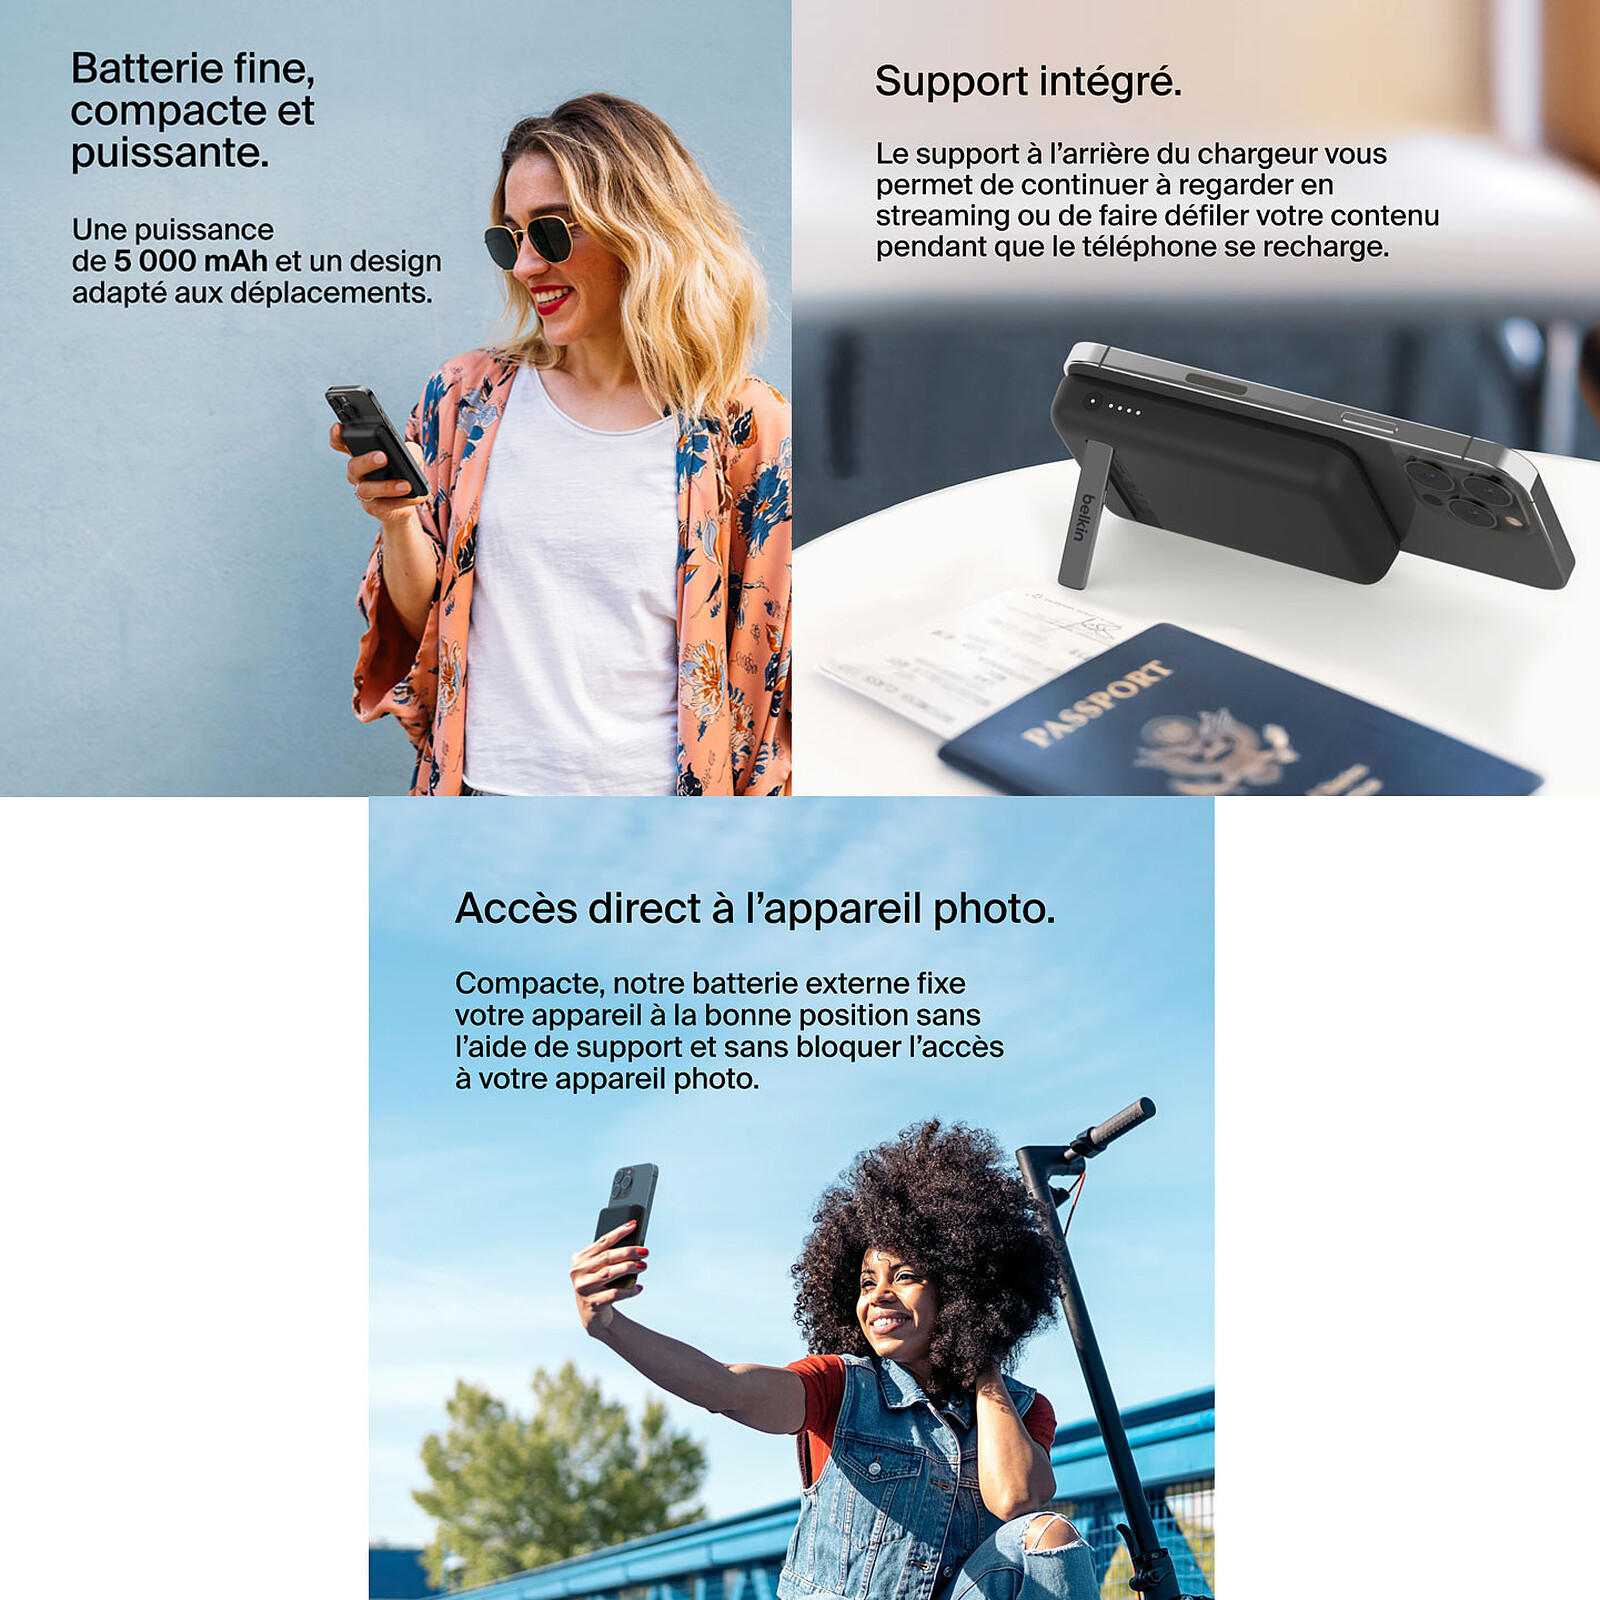 Belkin Support MagSafe pour iPhone et MacBook (Blanc) pas cher